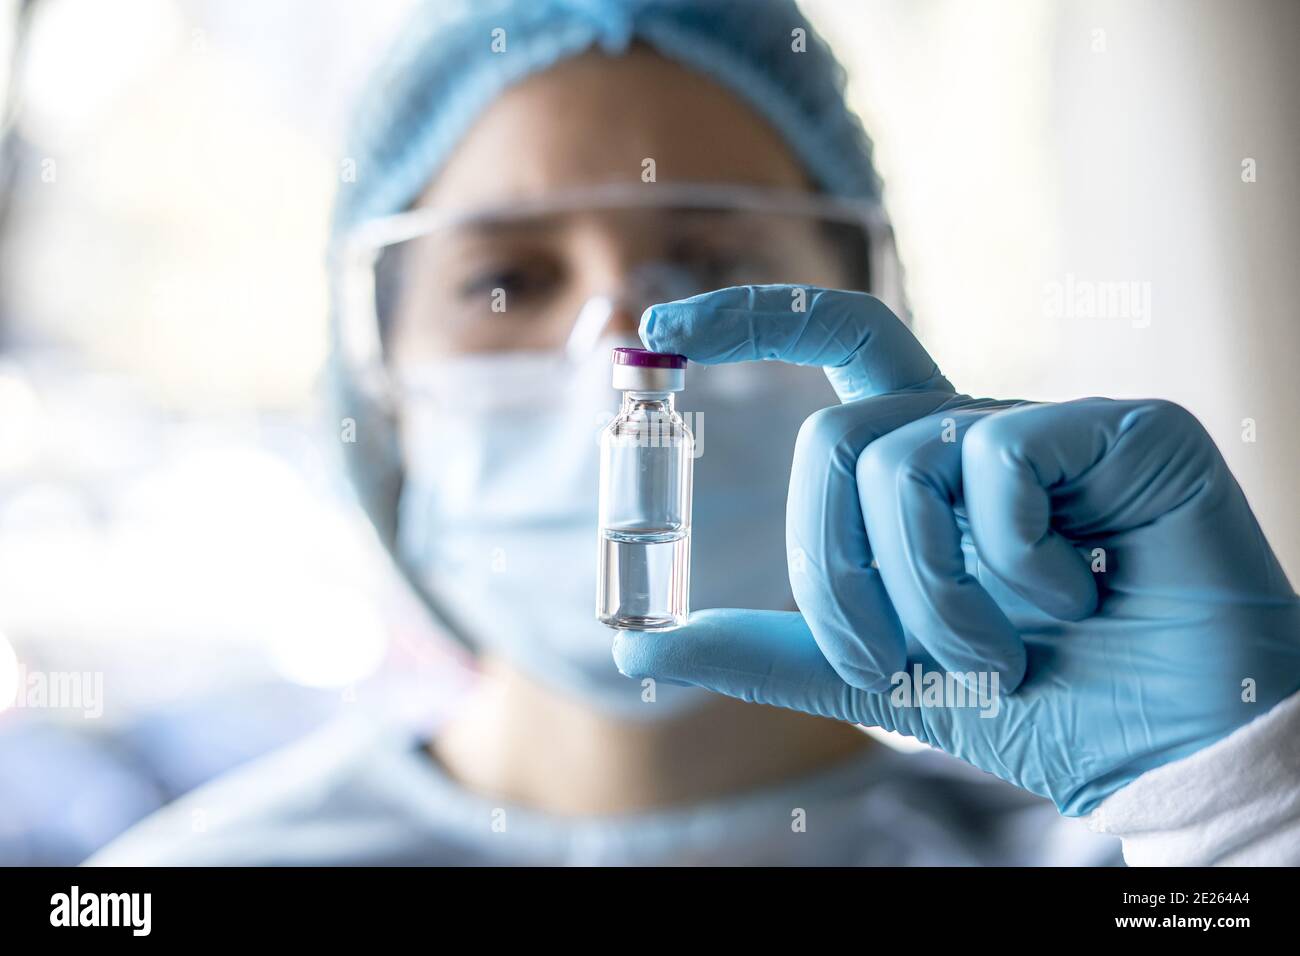 Doctor or laborant holding tube with nCoV Coronavirus vaccine for 2019-nCoV virus Stock Photo